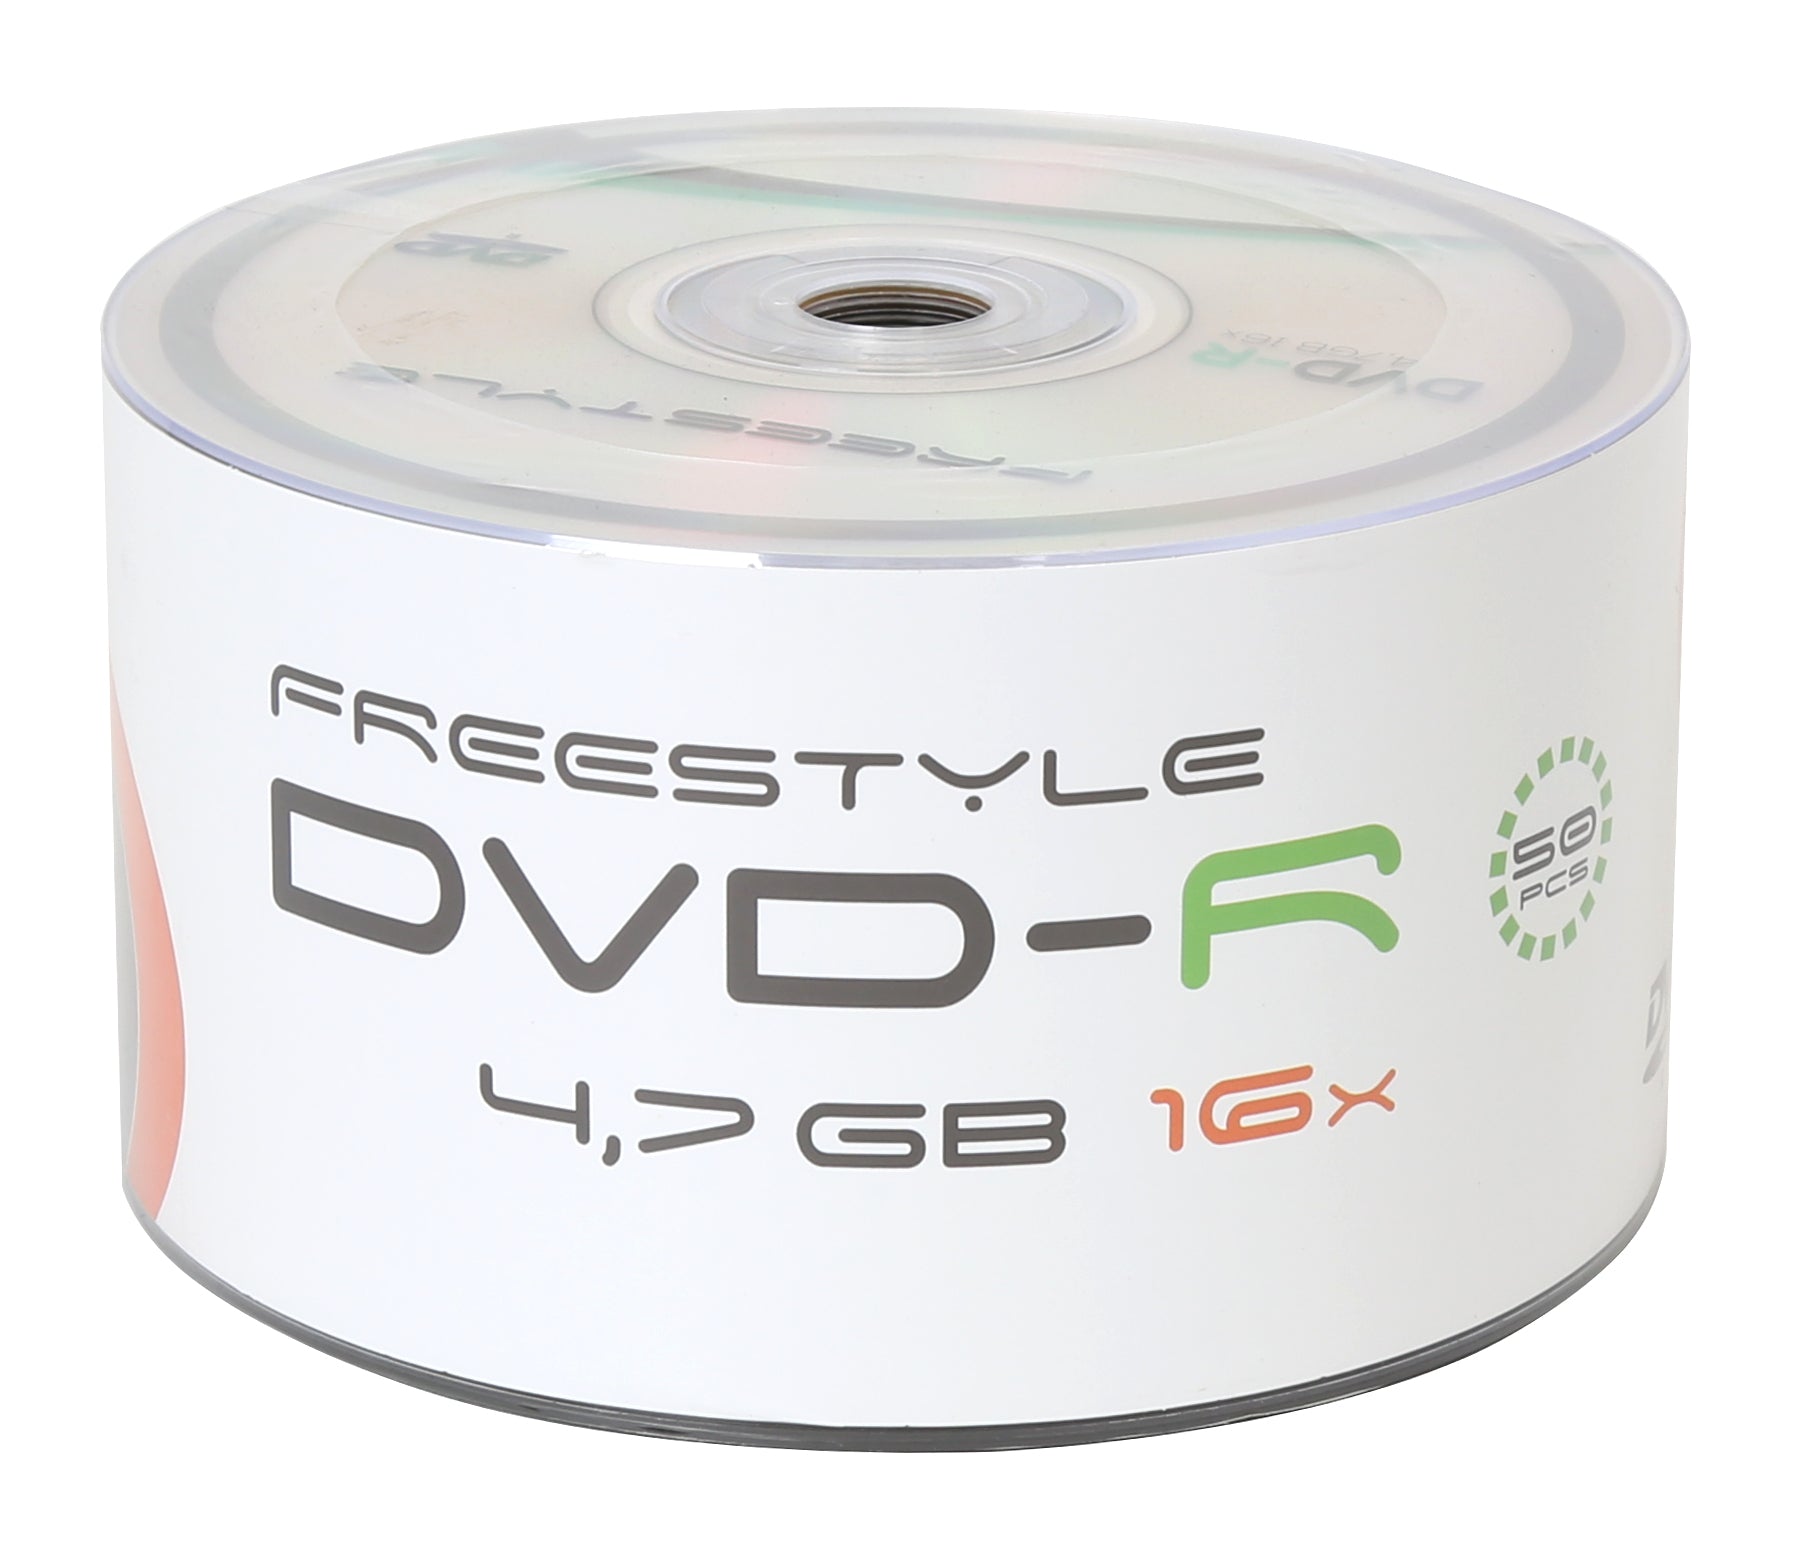 DVD-R (x50 pack)